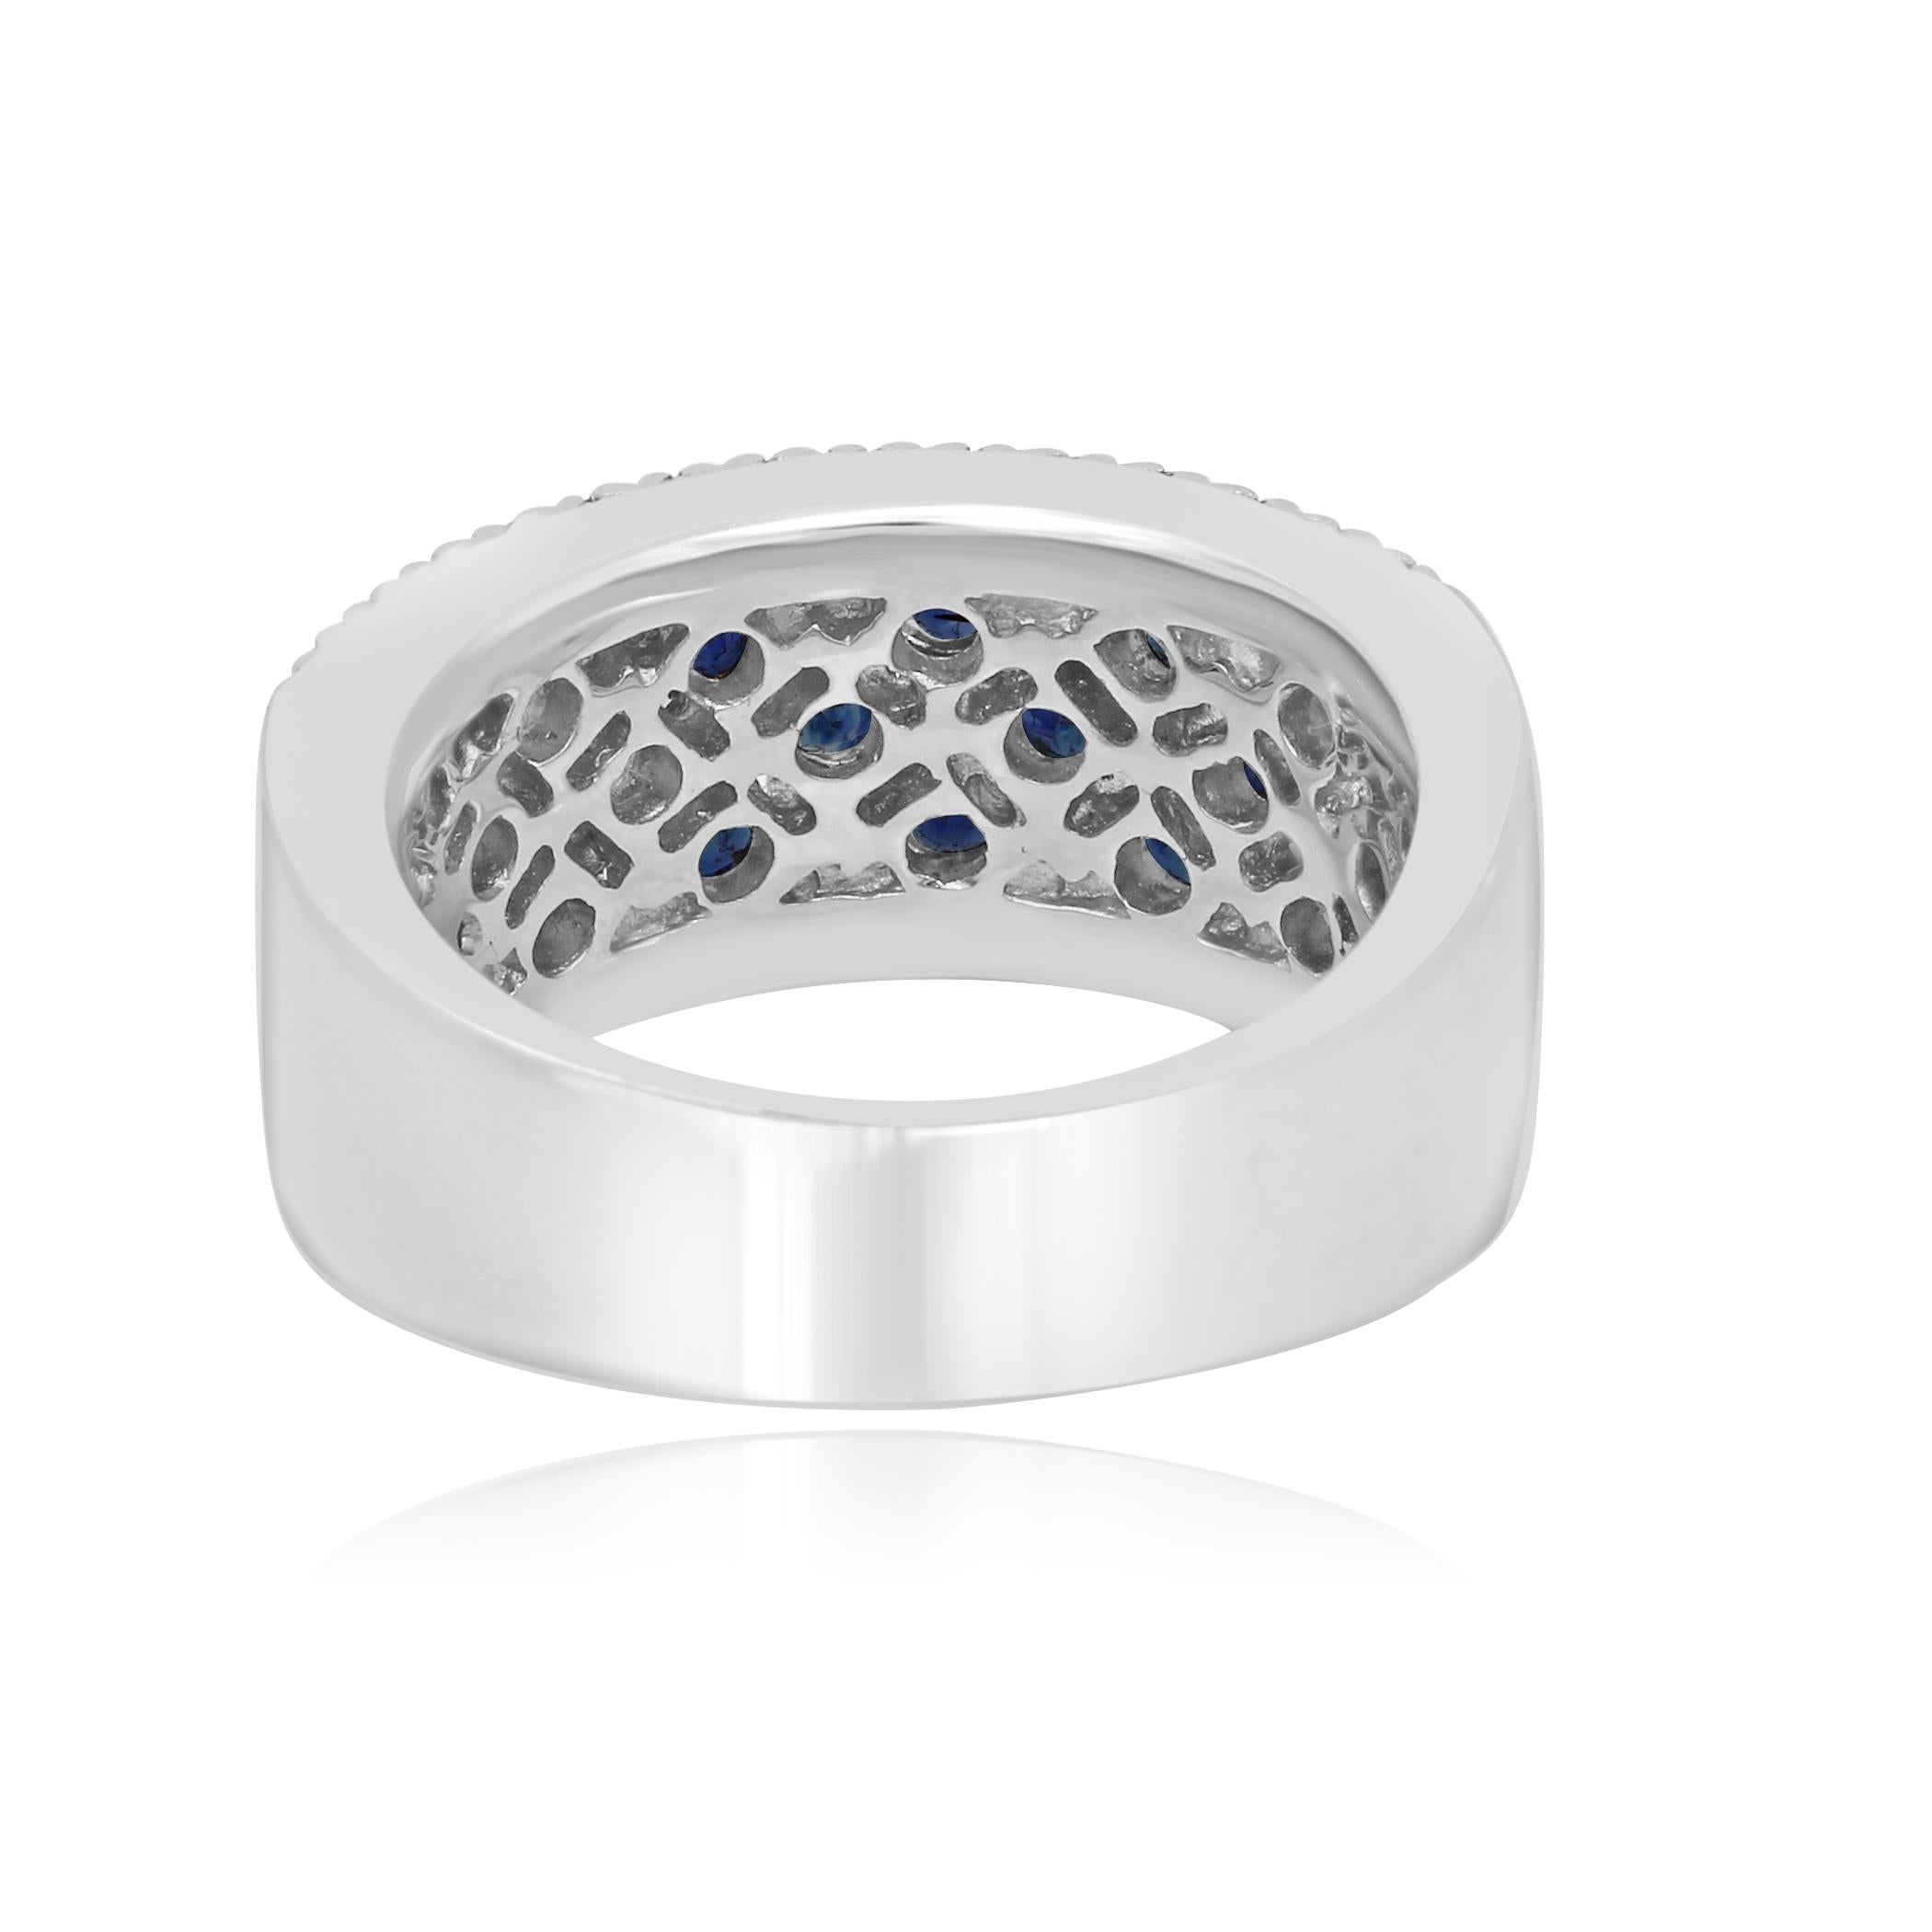 Women's or Men's Blue Sapphire Round White Diamond Cocktail Fashion Gold Band Ring